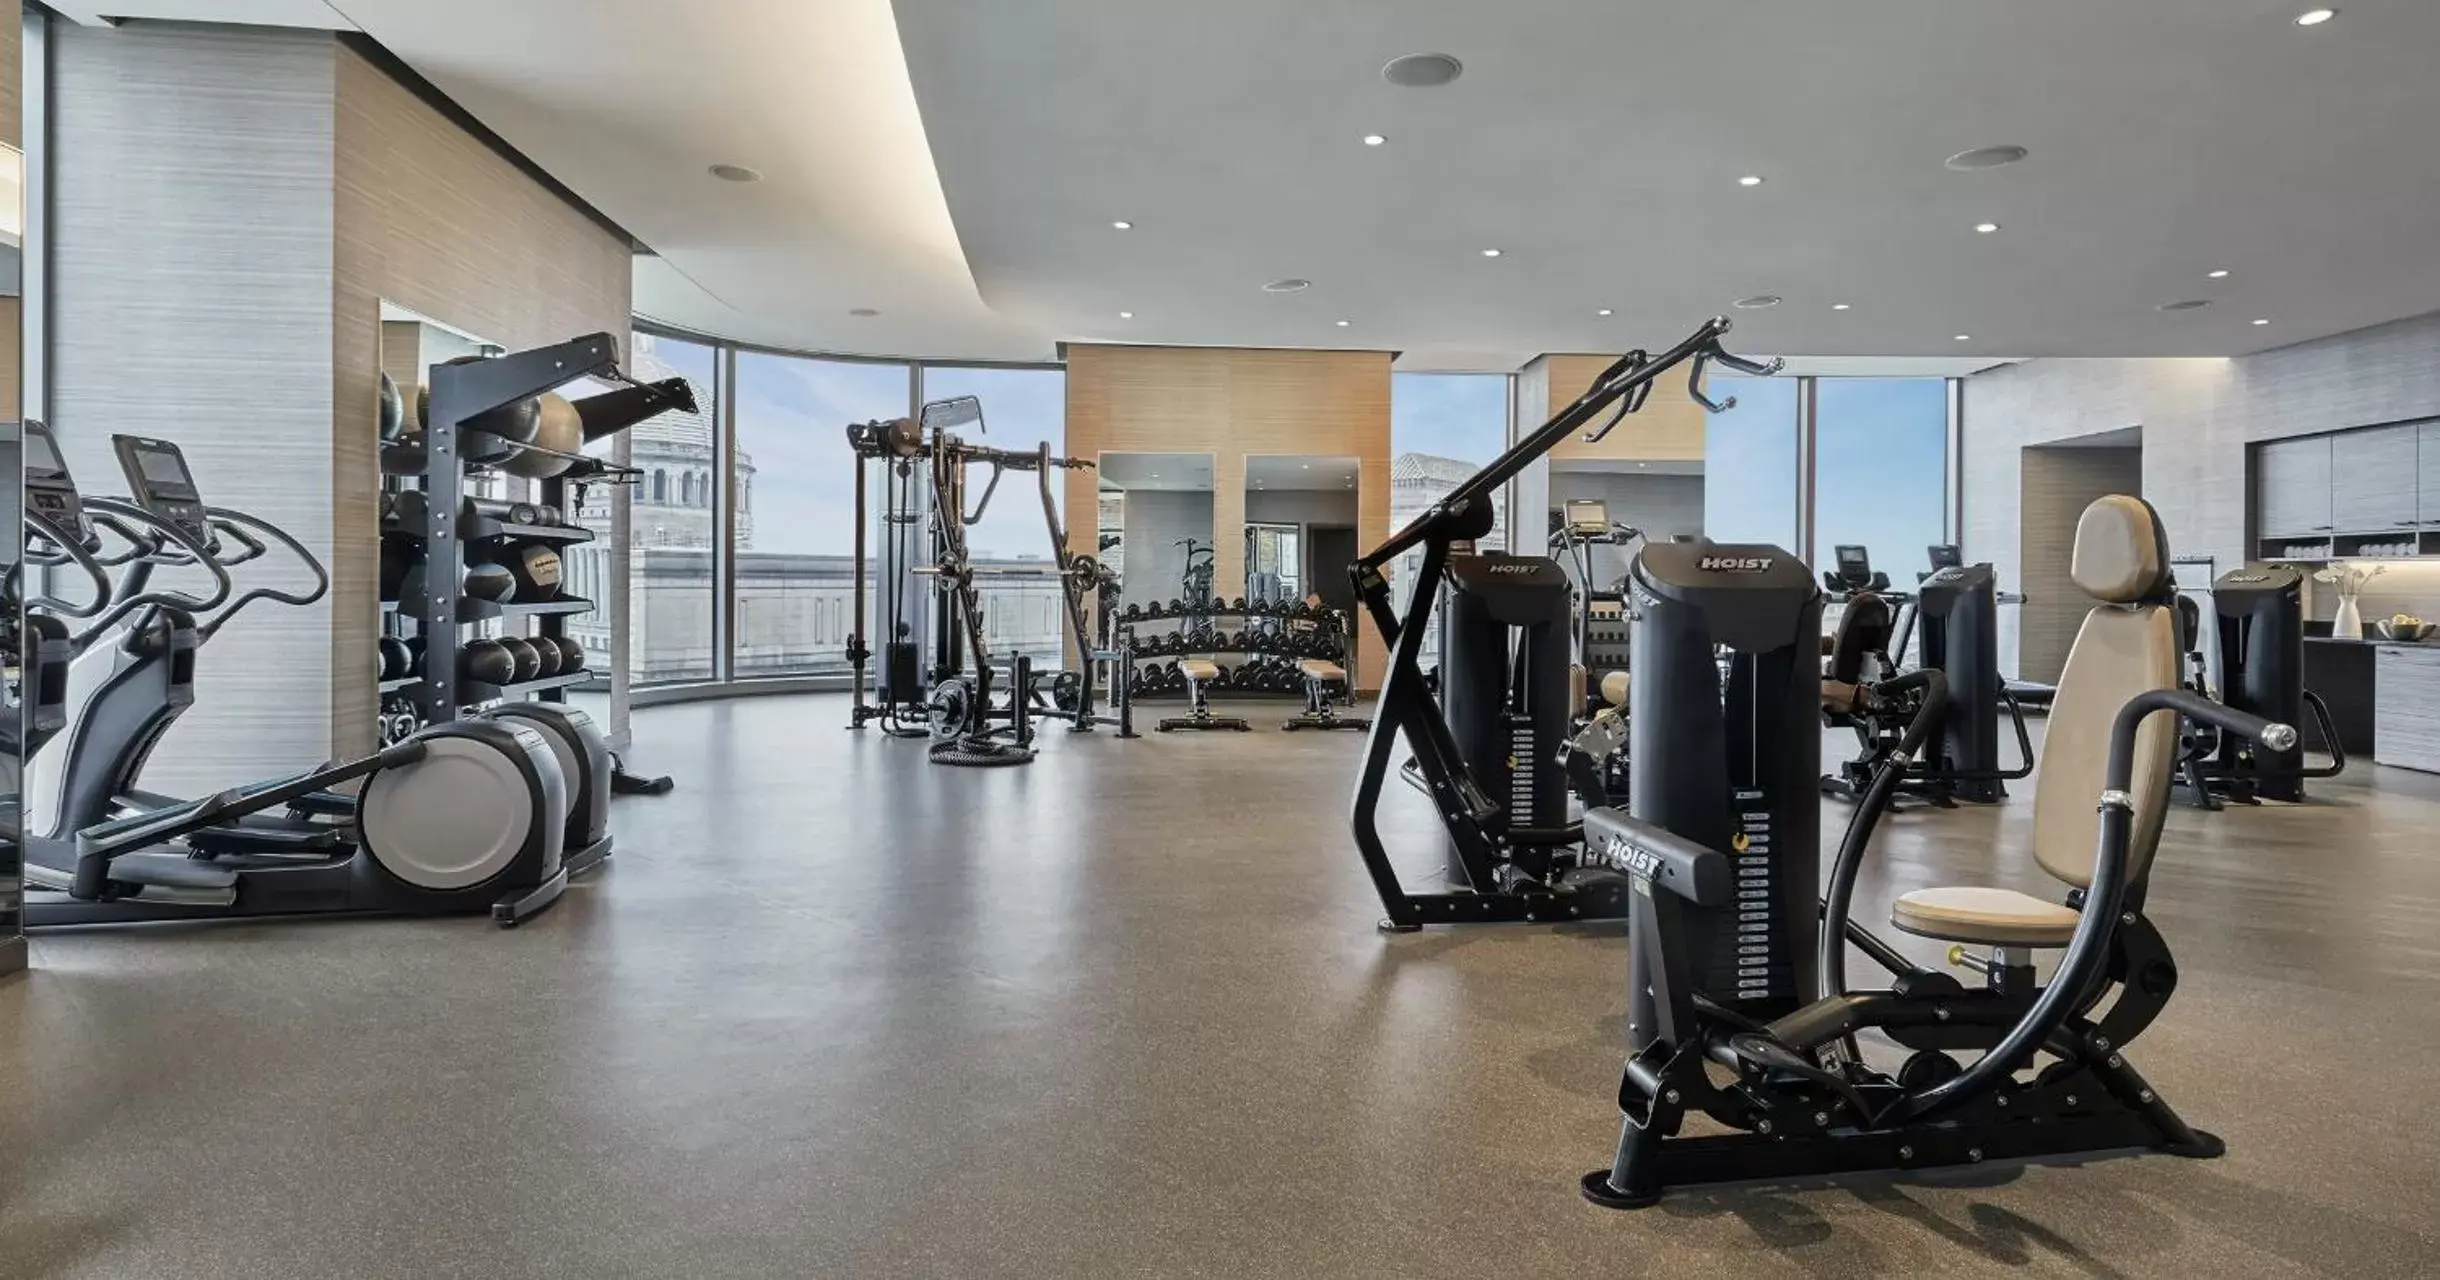 Fitness centre/facilities, Fitness Center/Facilities in Four Seasons Hotel One Dalton Street, Boston